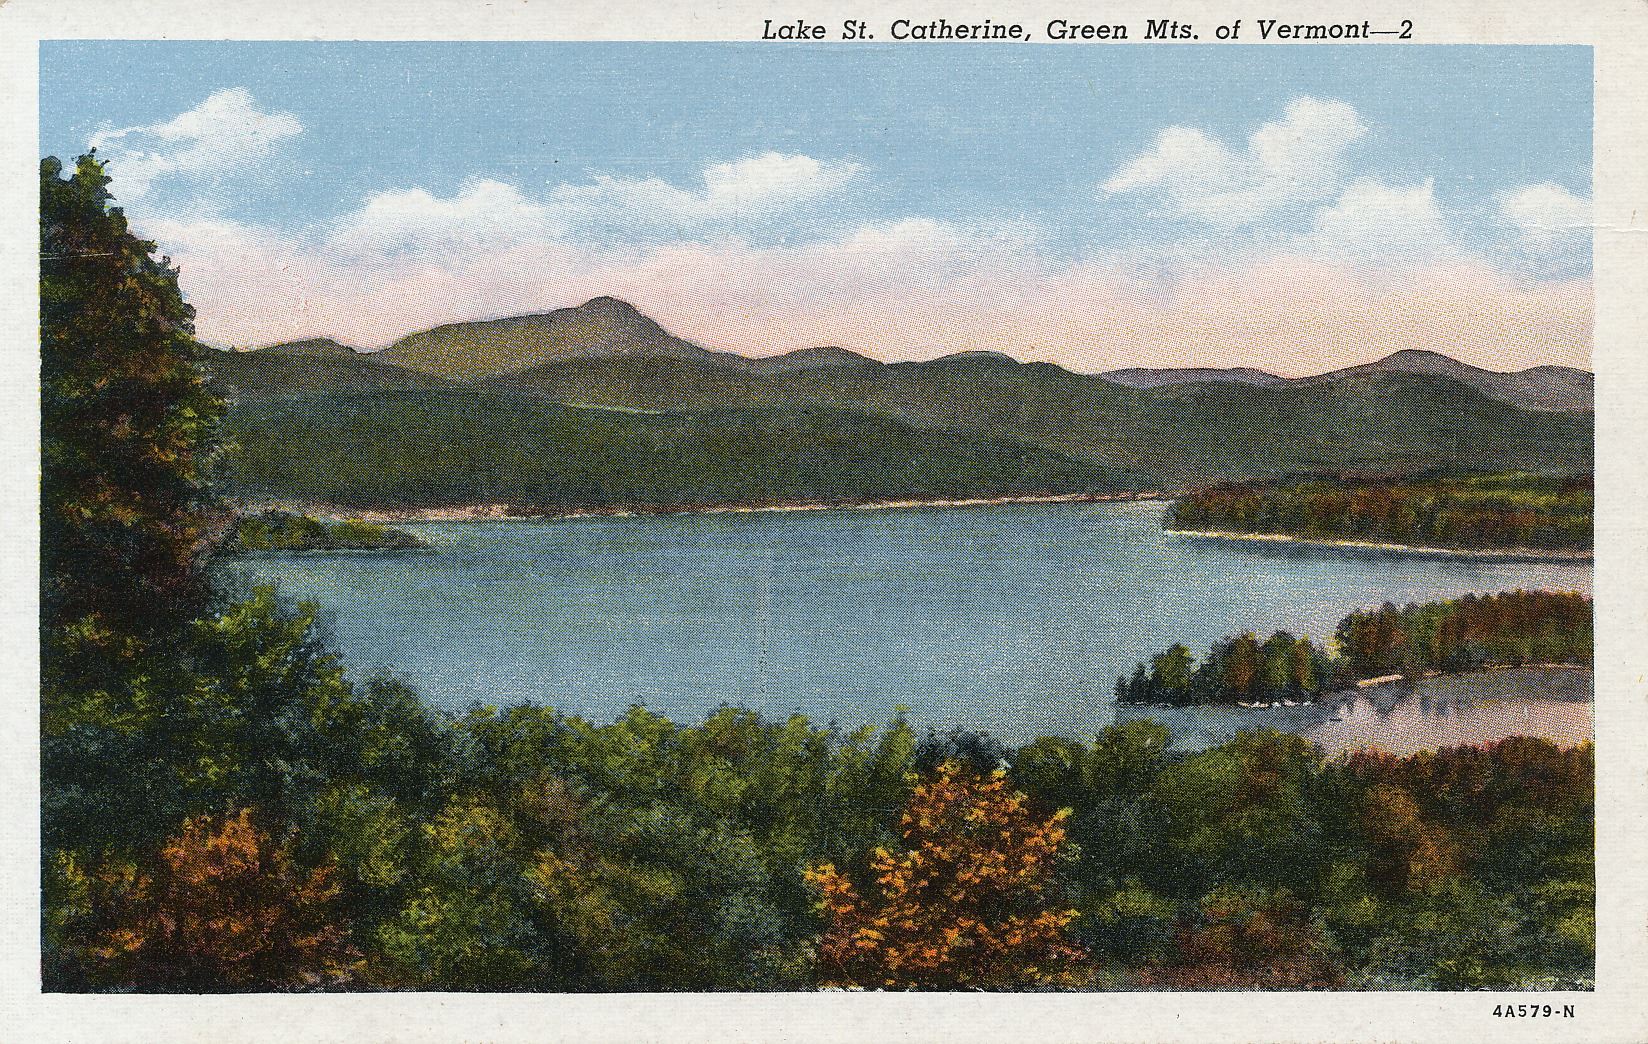 Vintage postcard of Lake St. Catherine - 2022 Membership Drive